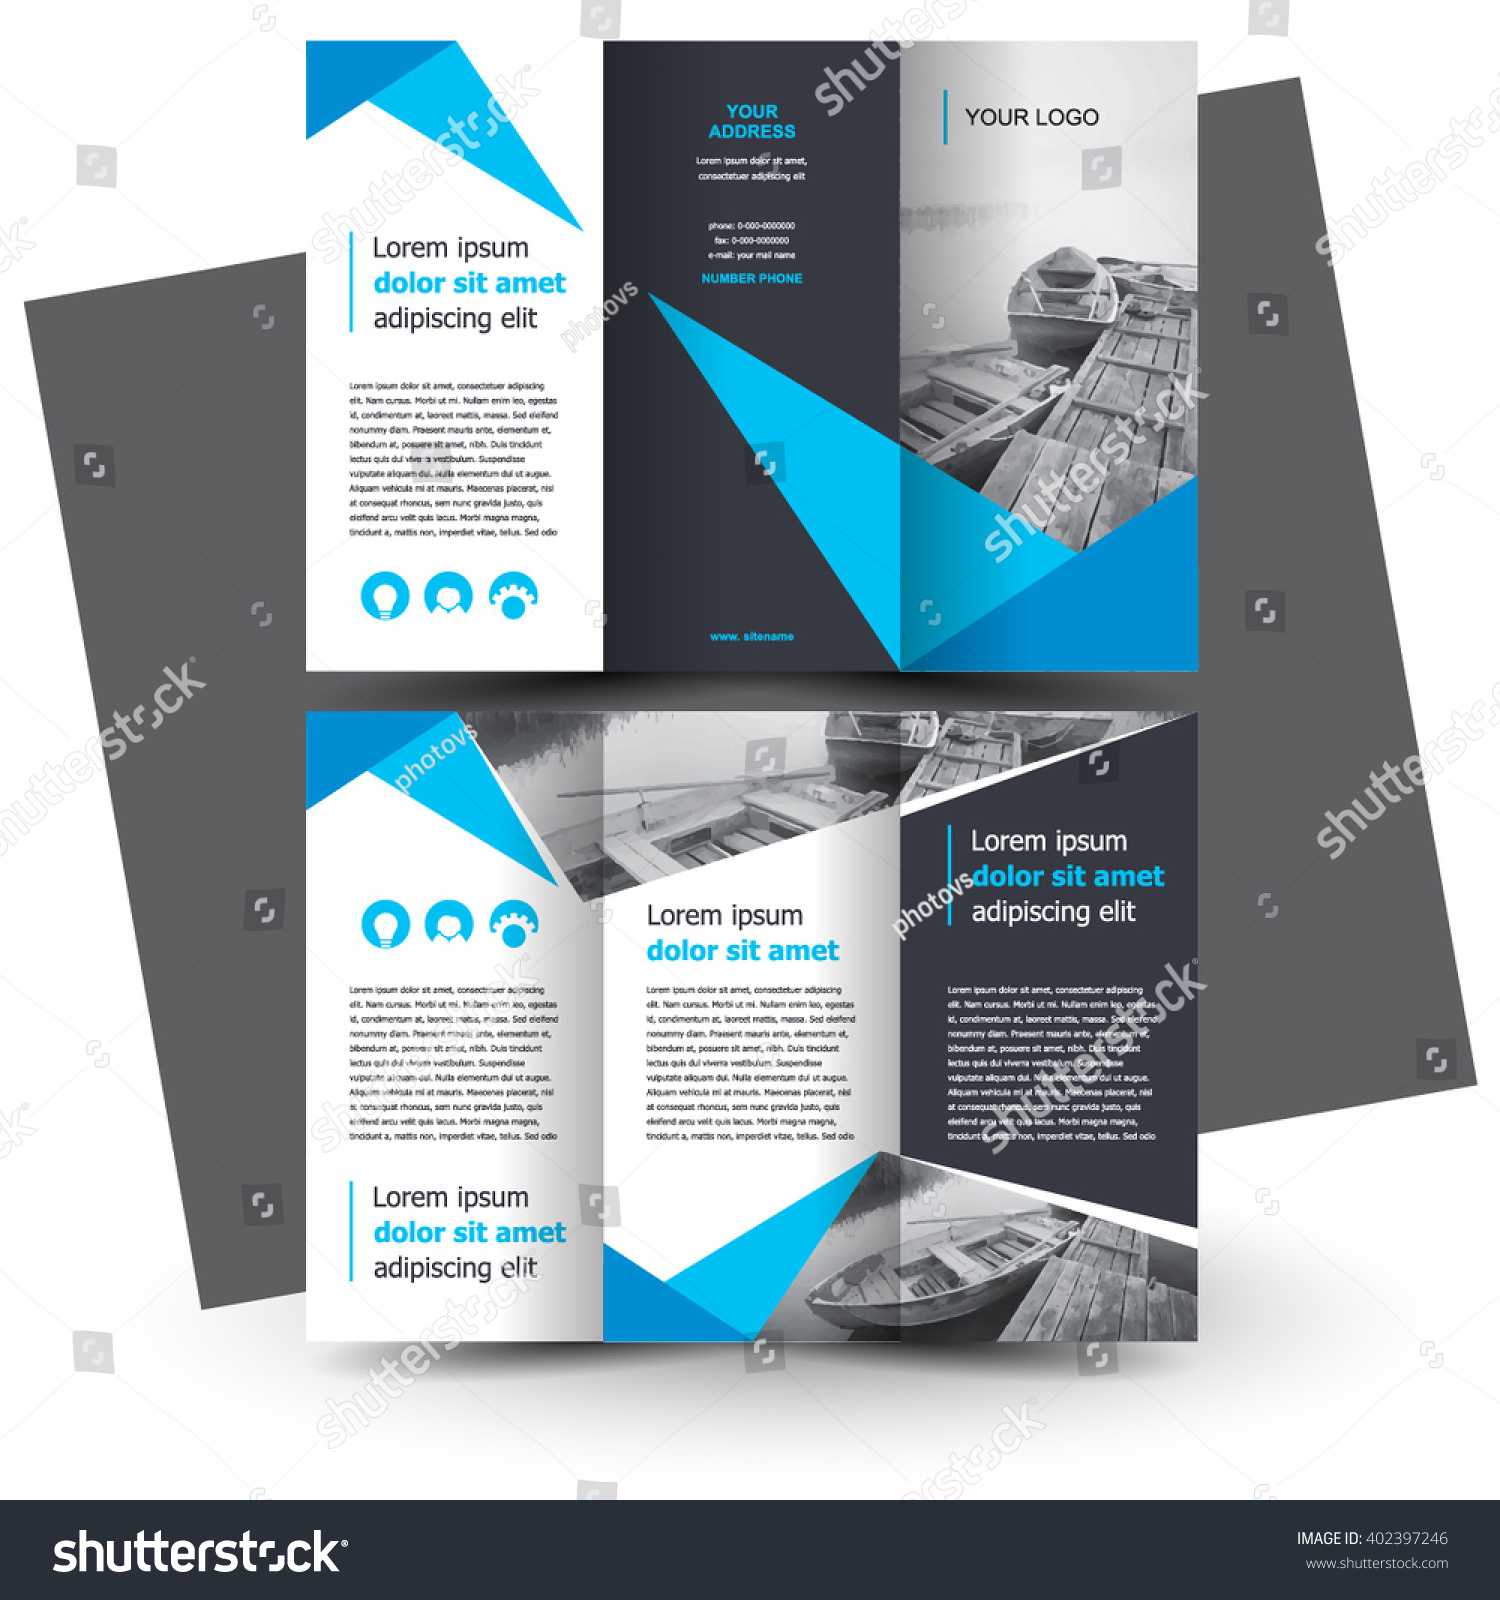 Catalog Design Templates Free Download ] – Brochure Design With Regard To Engineering Brochure Templates Free Download